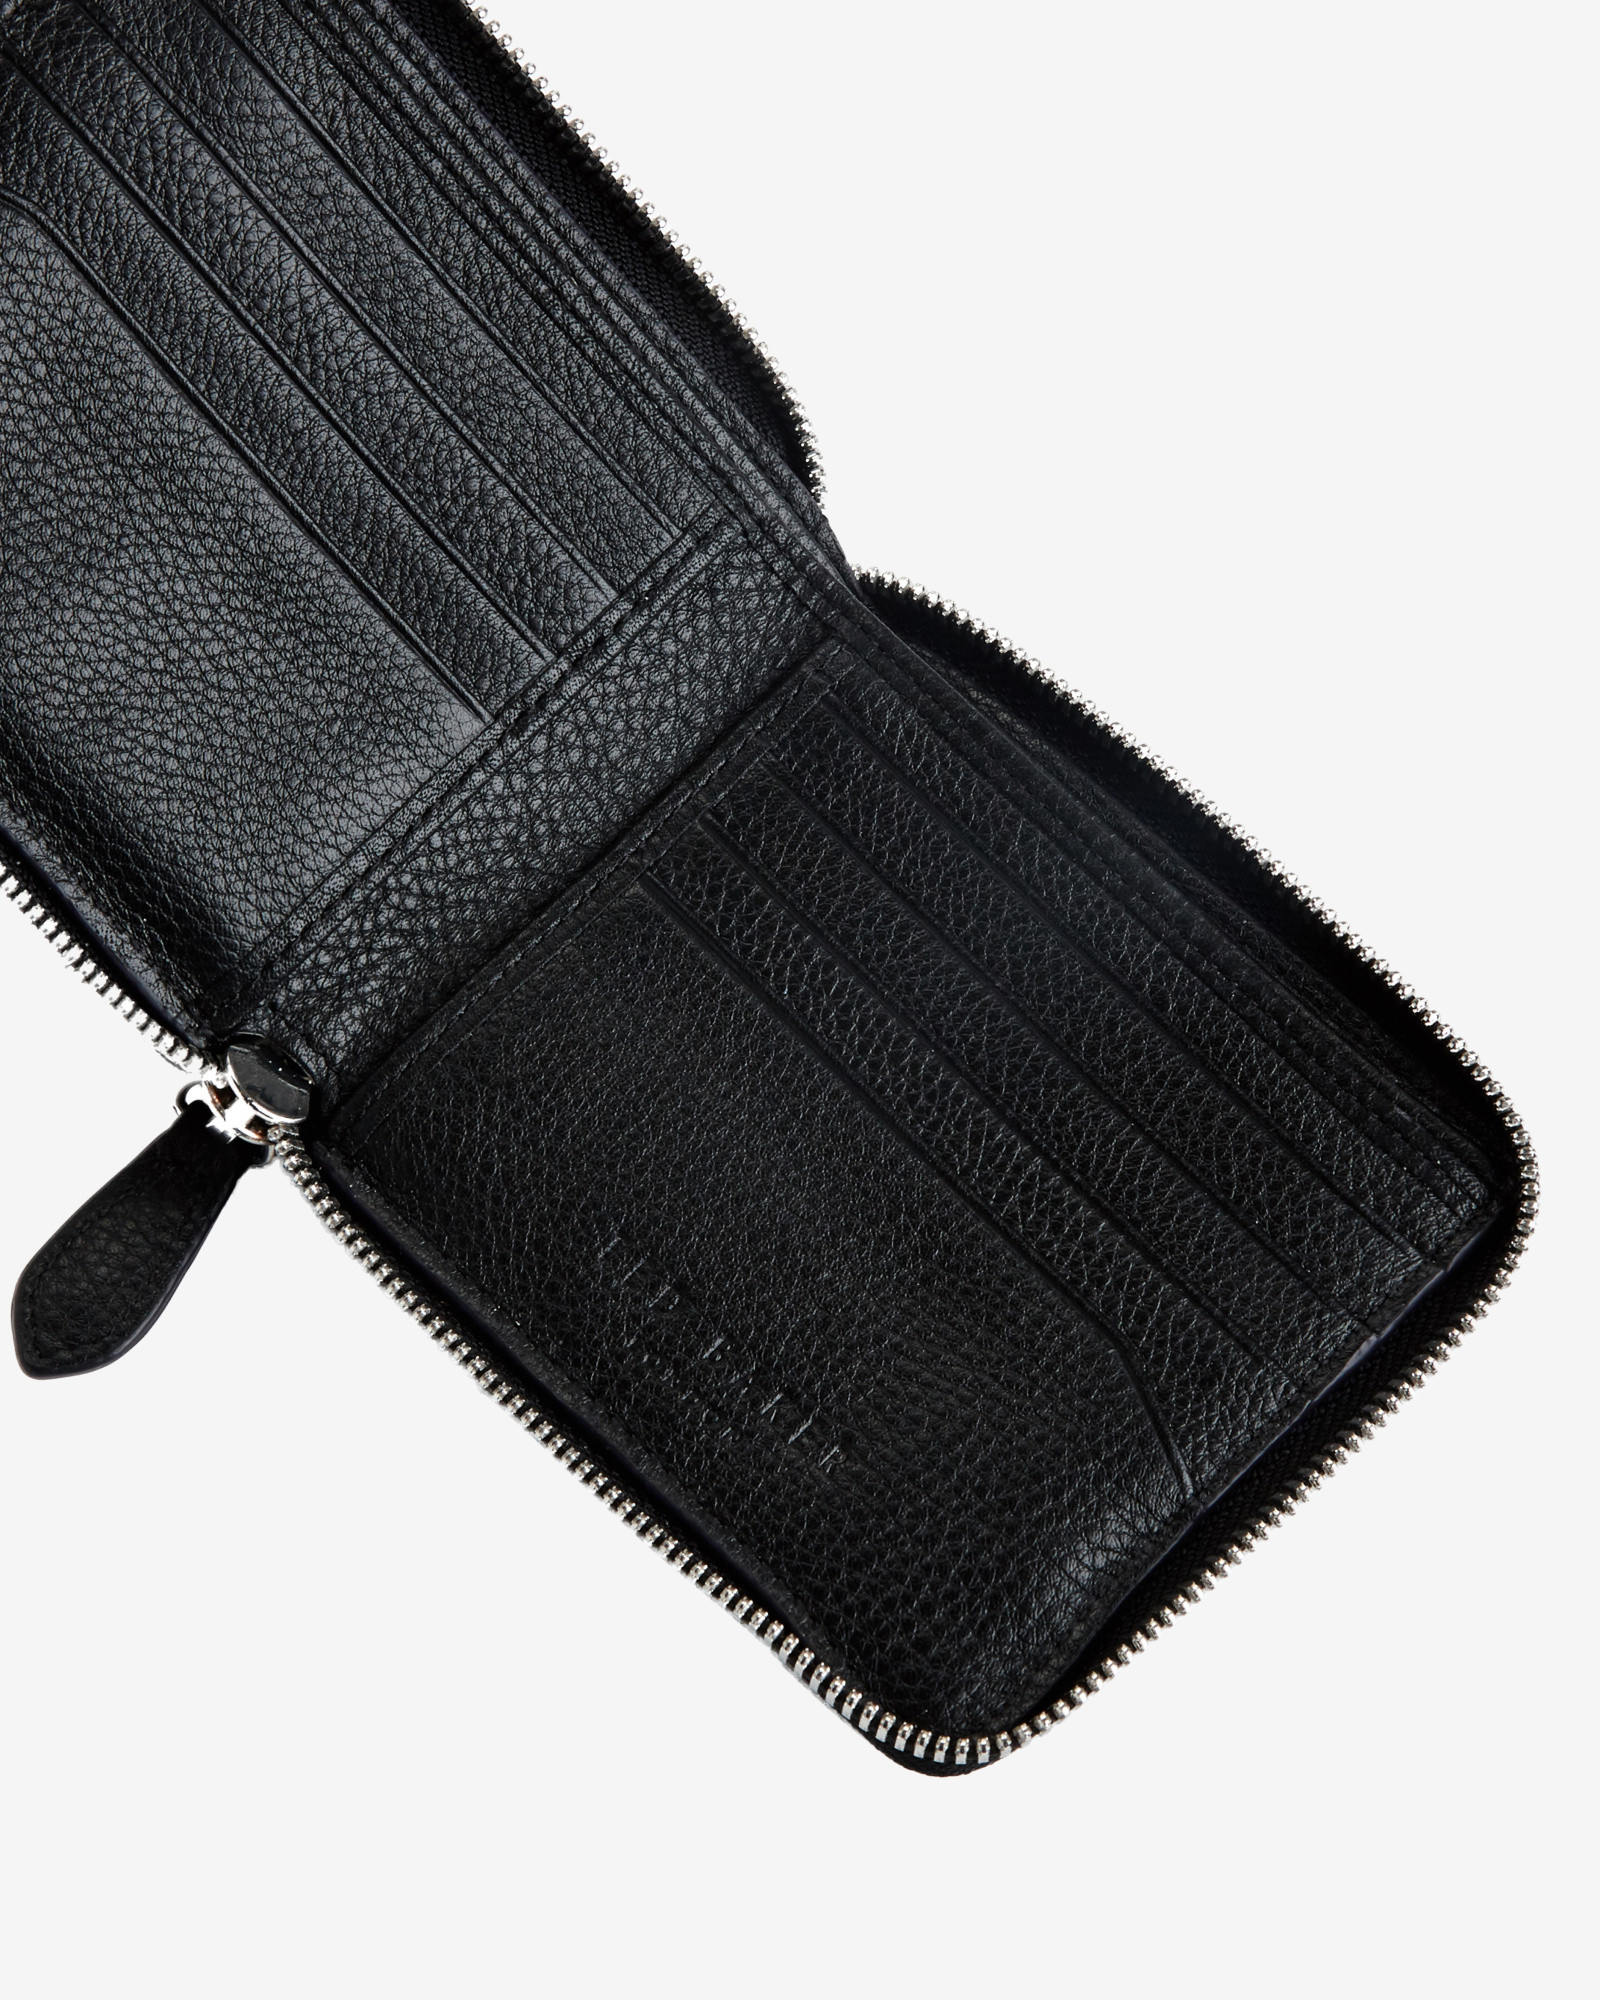 Ted Baker Zip Around Bi-fold Wallet in Black for Men - Lyst